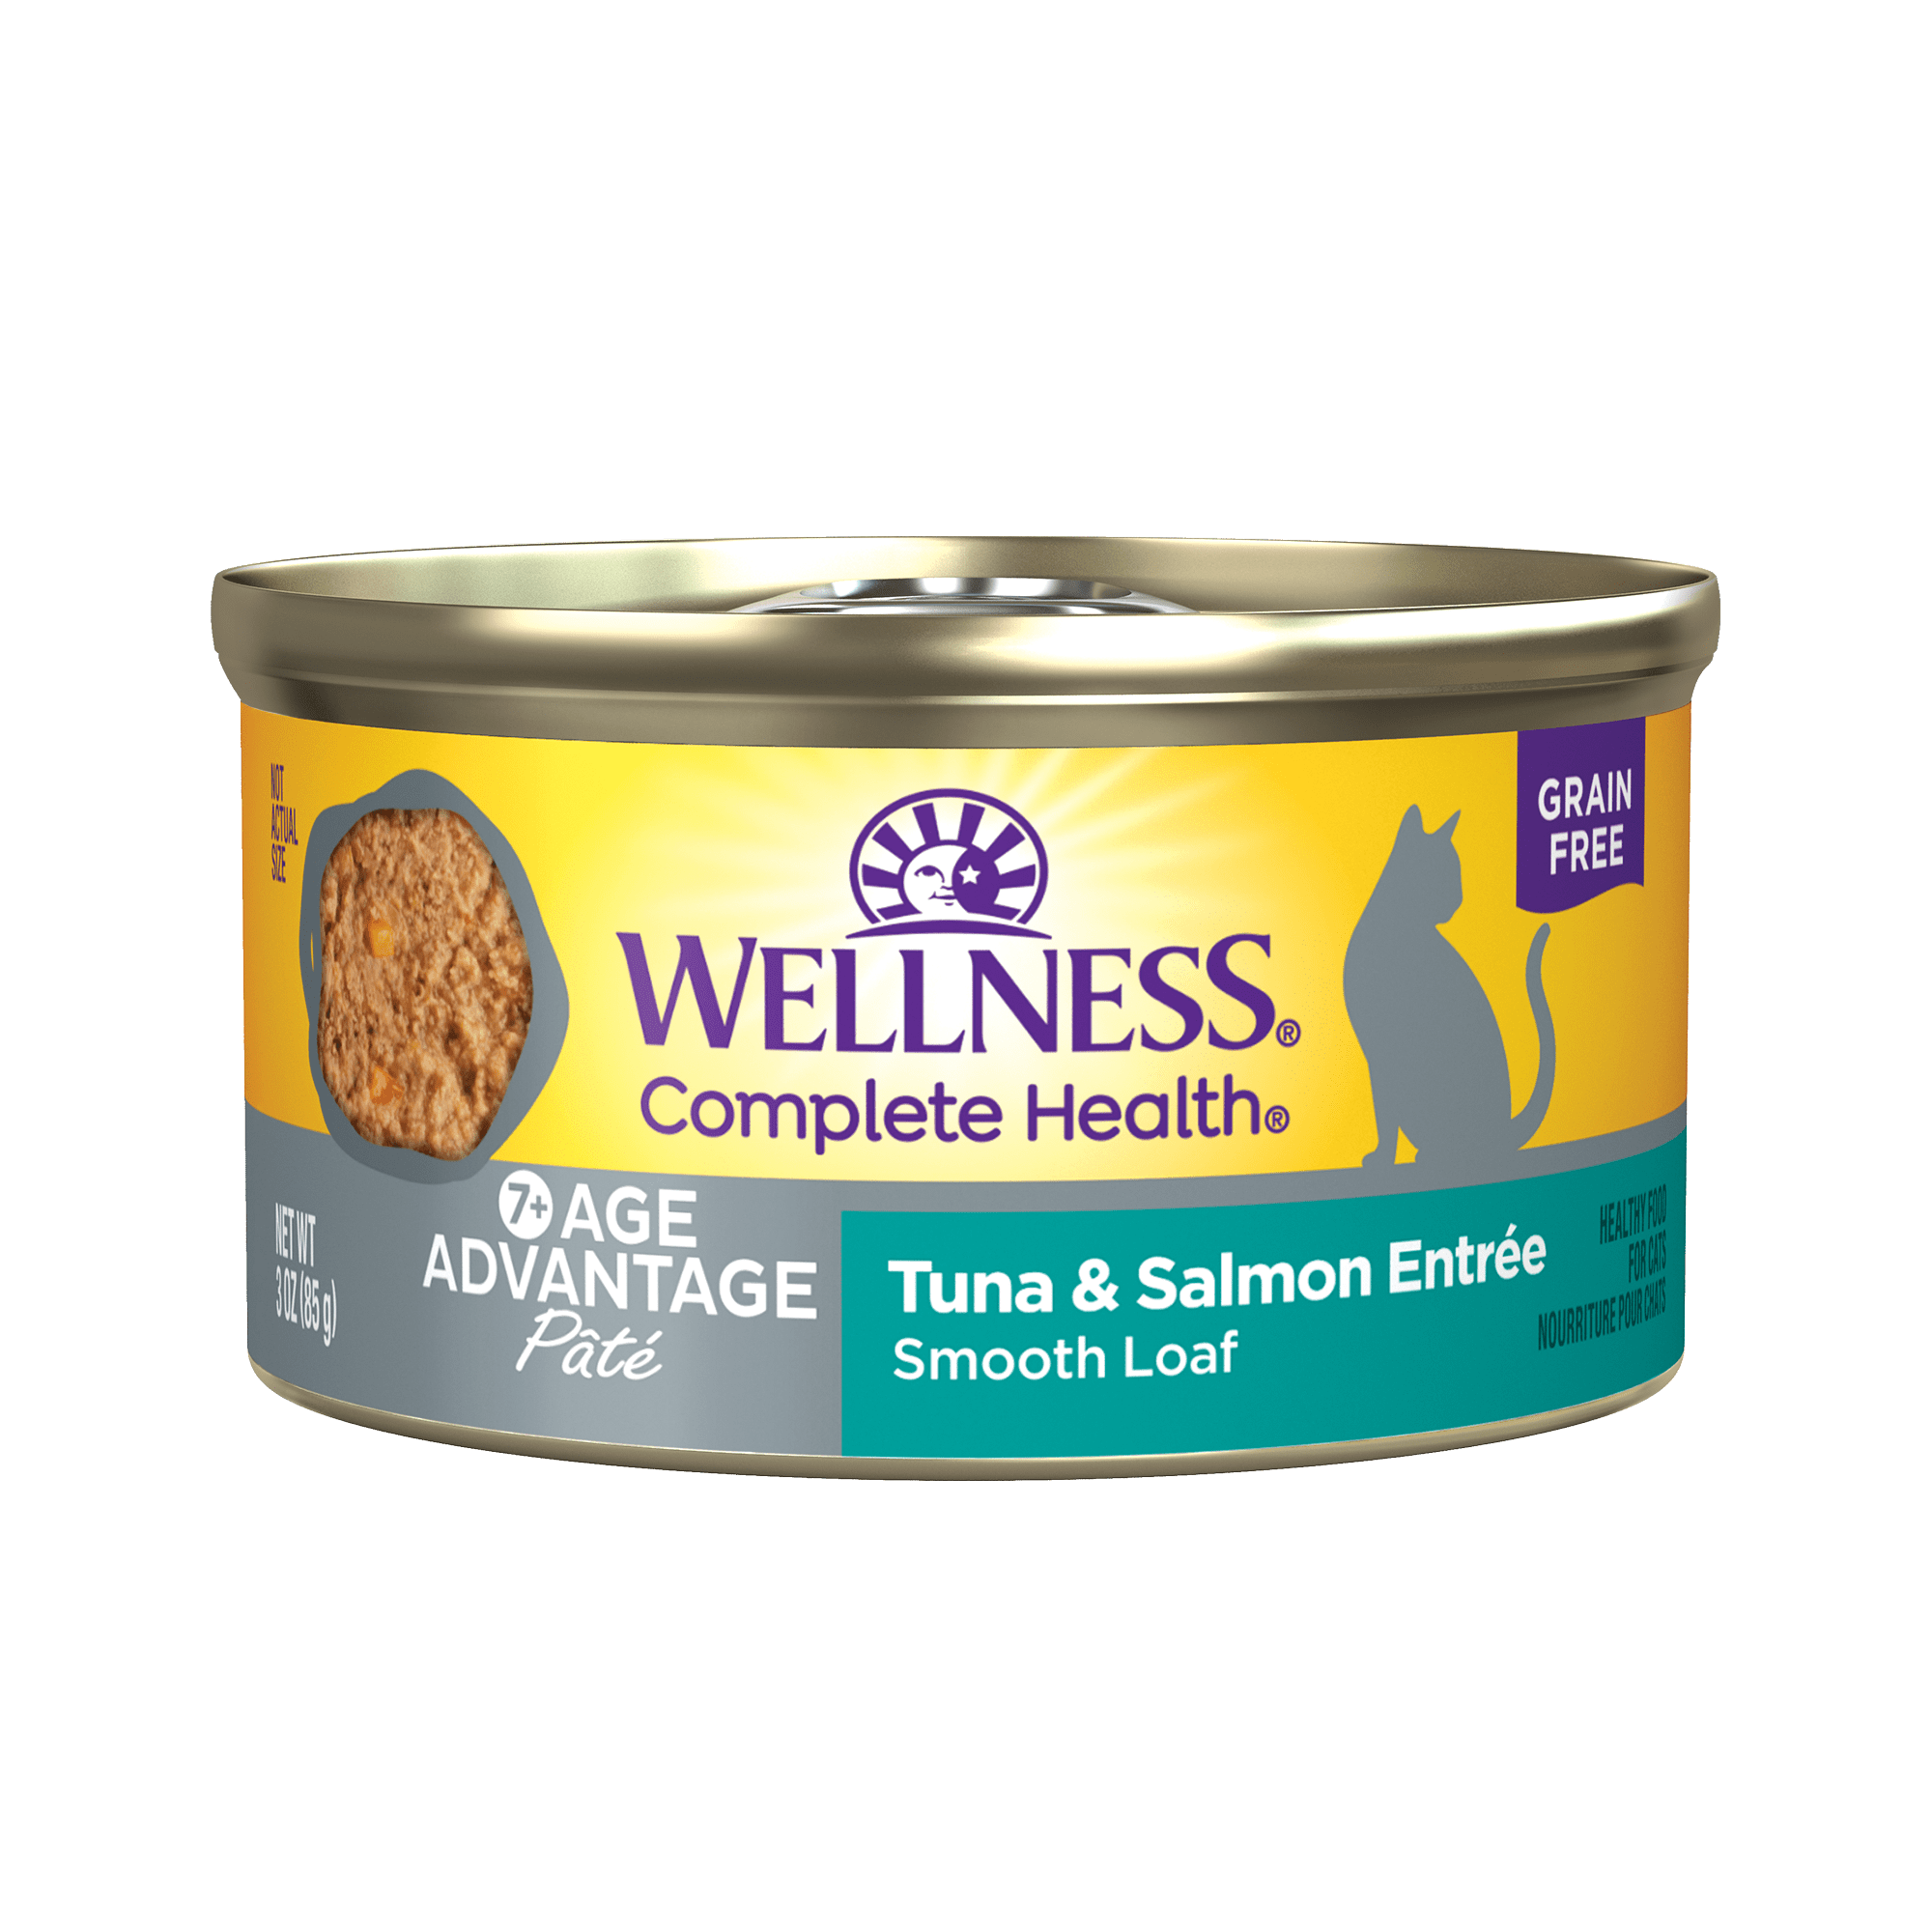 Age Advantage (7+): Tuna & Salmon